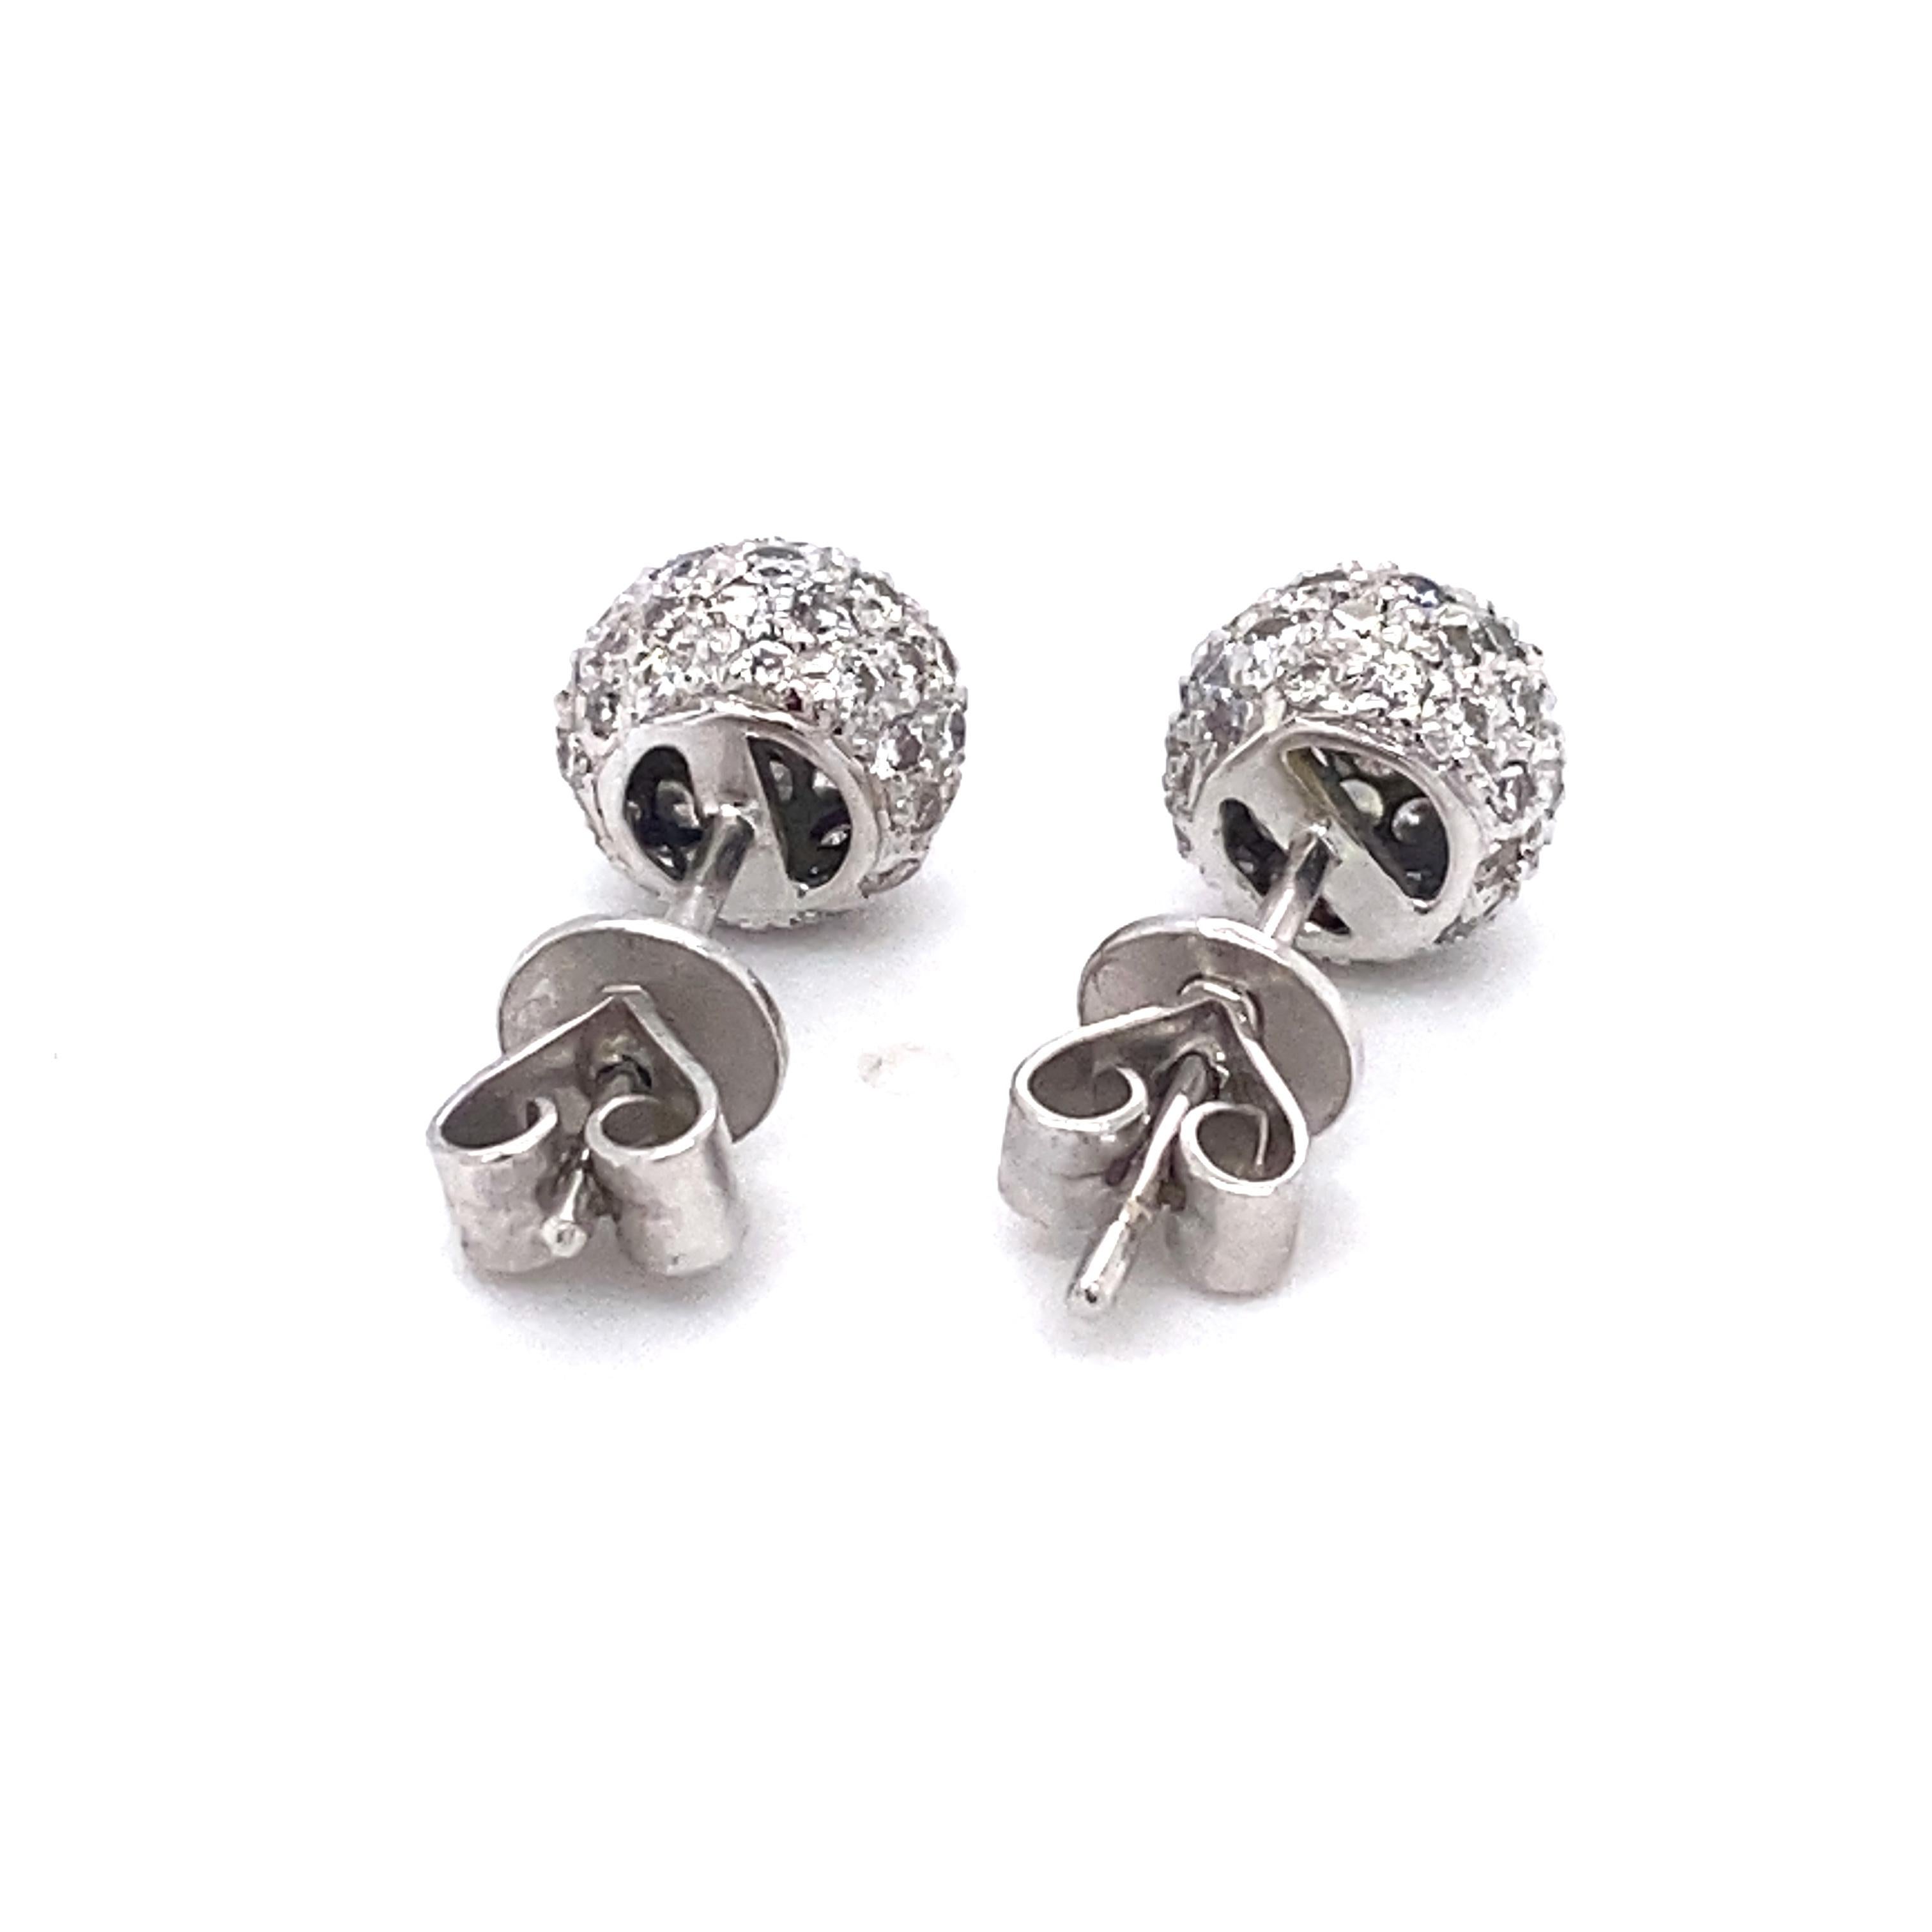 1 carat pave diamond earrings